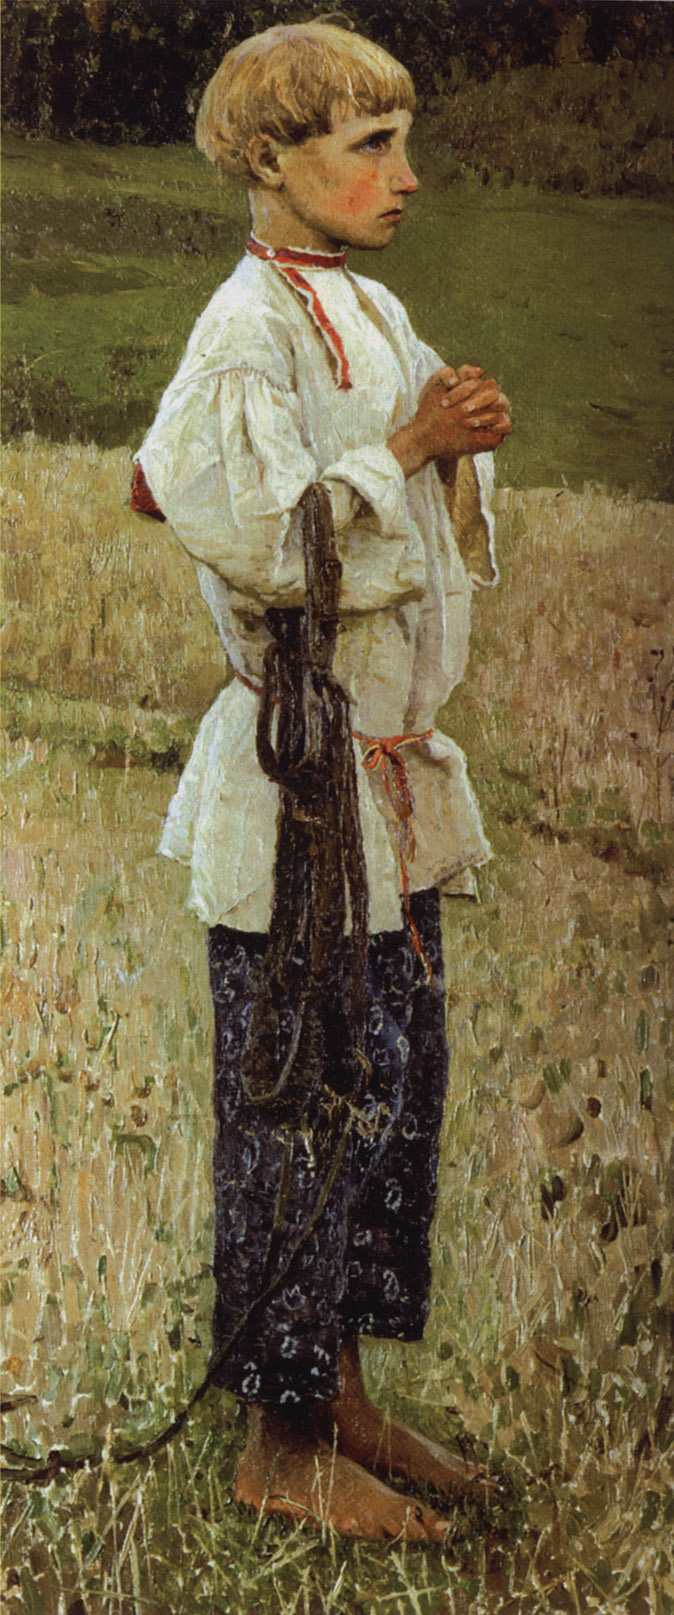 Mikhail Vasilyevich Nesterov. The boy Bartholomew. Sketch for the painting "The vision of the youth Bartholomew"